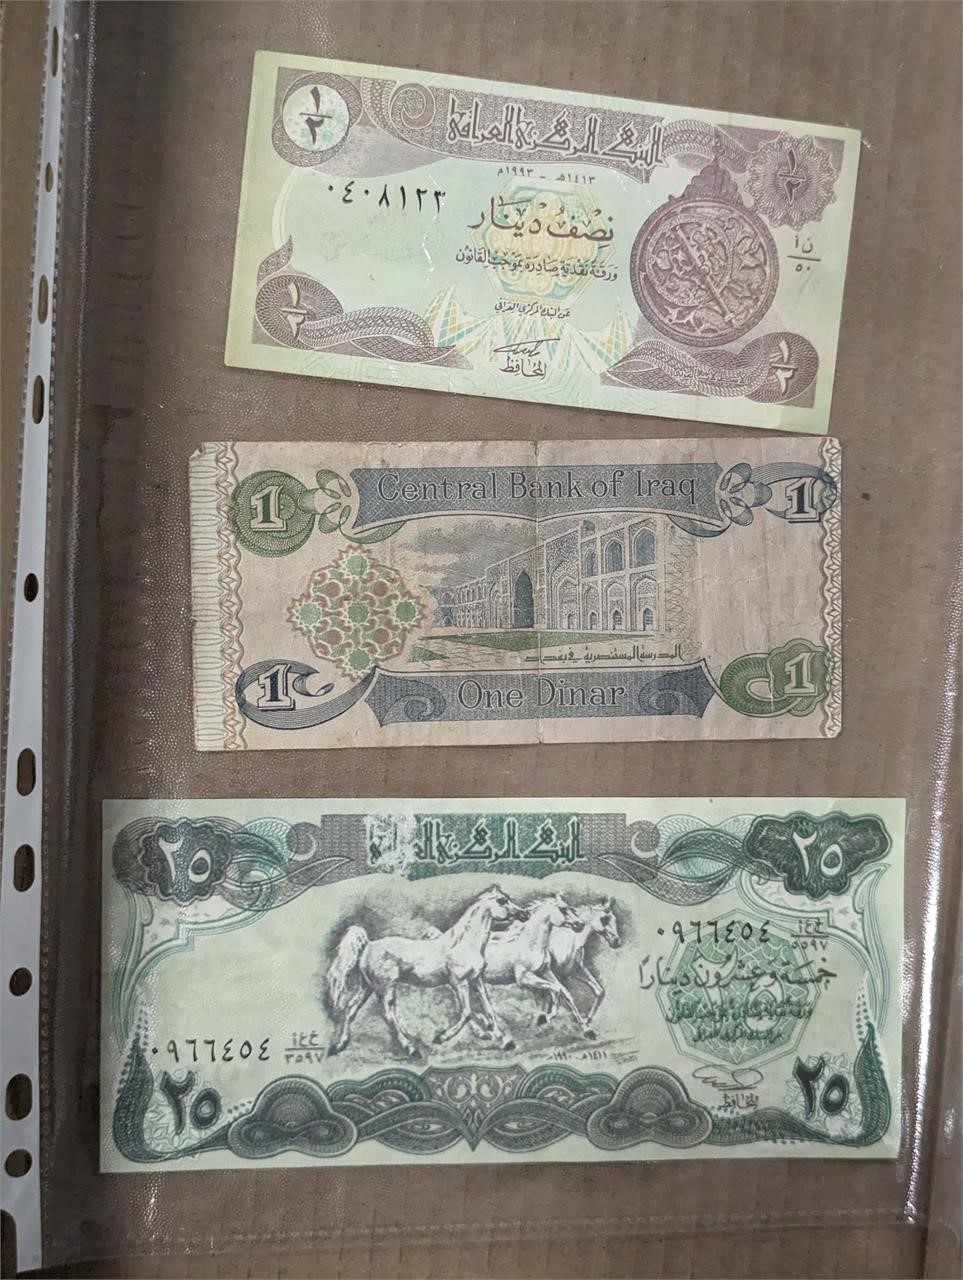 Iraq currency